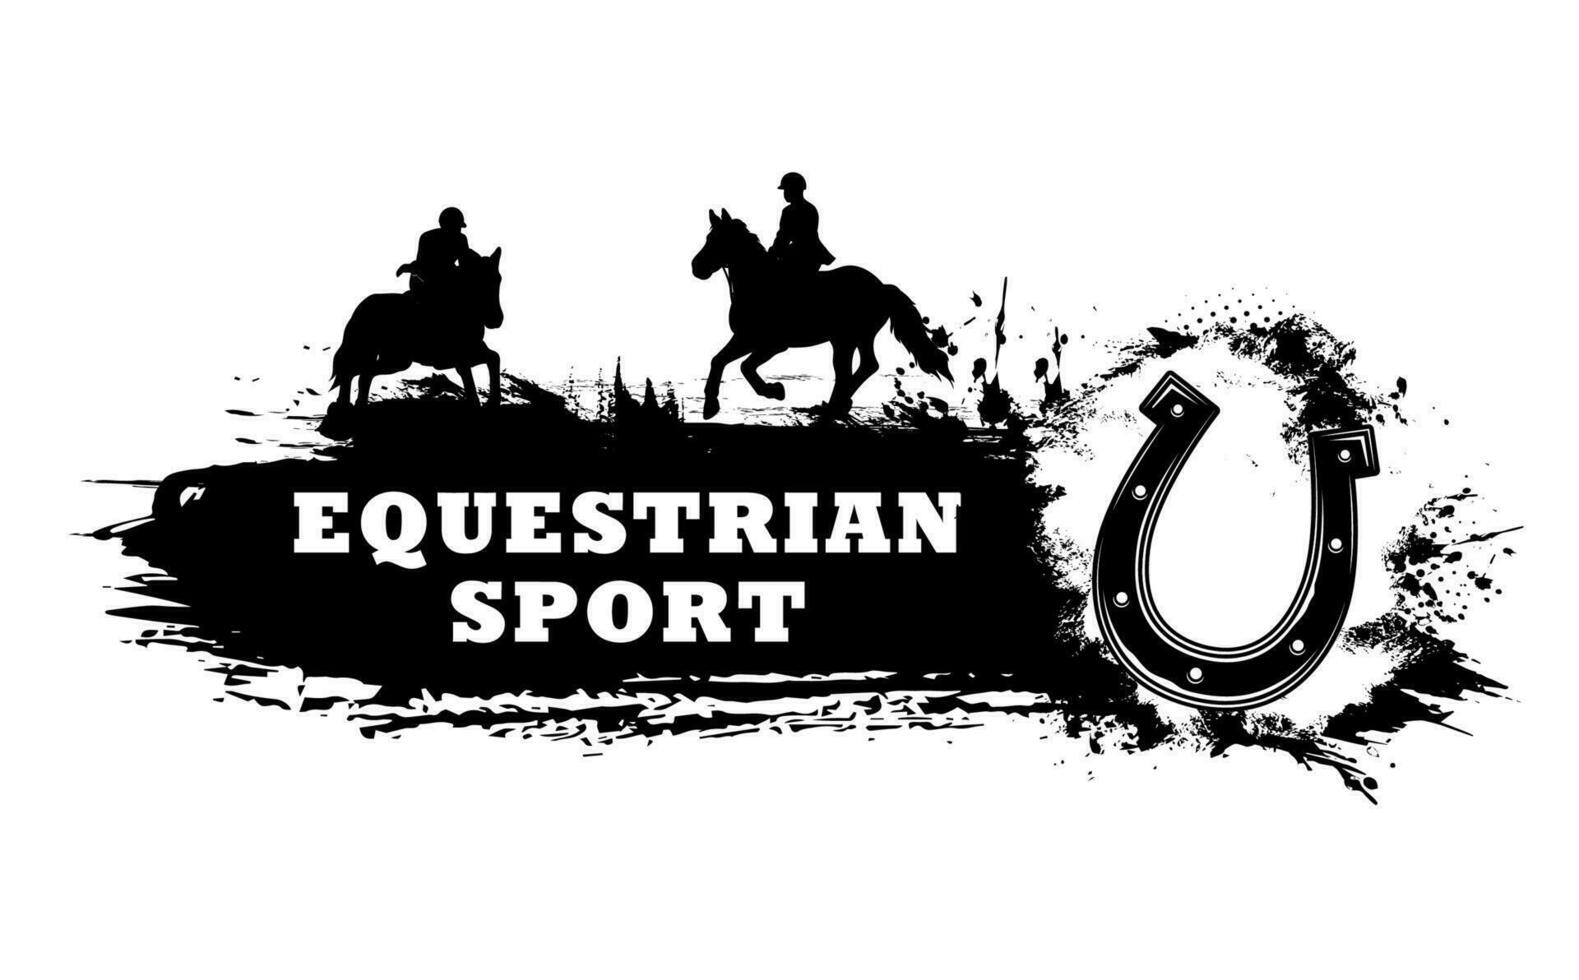 Equestrian sport club grunge banner, horse riding vector